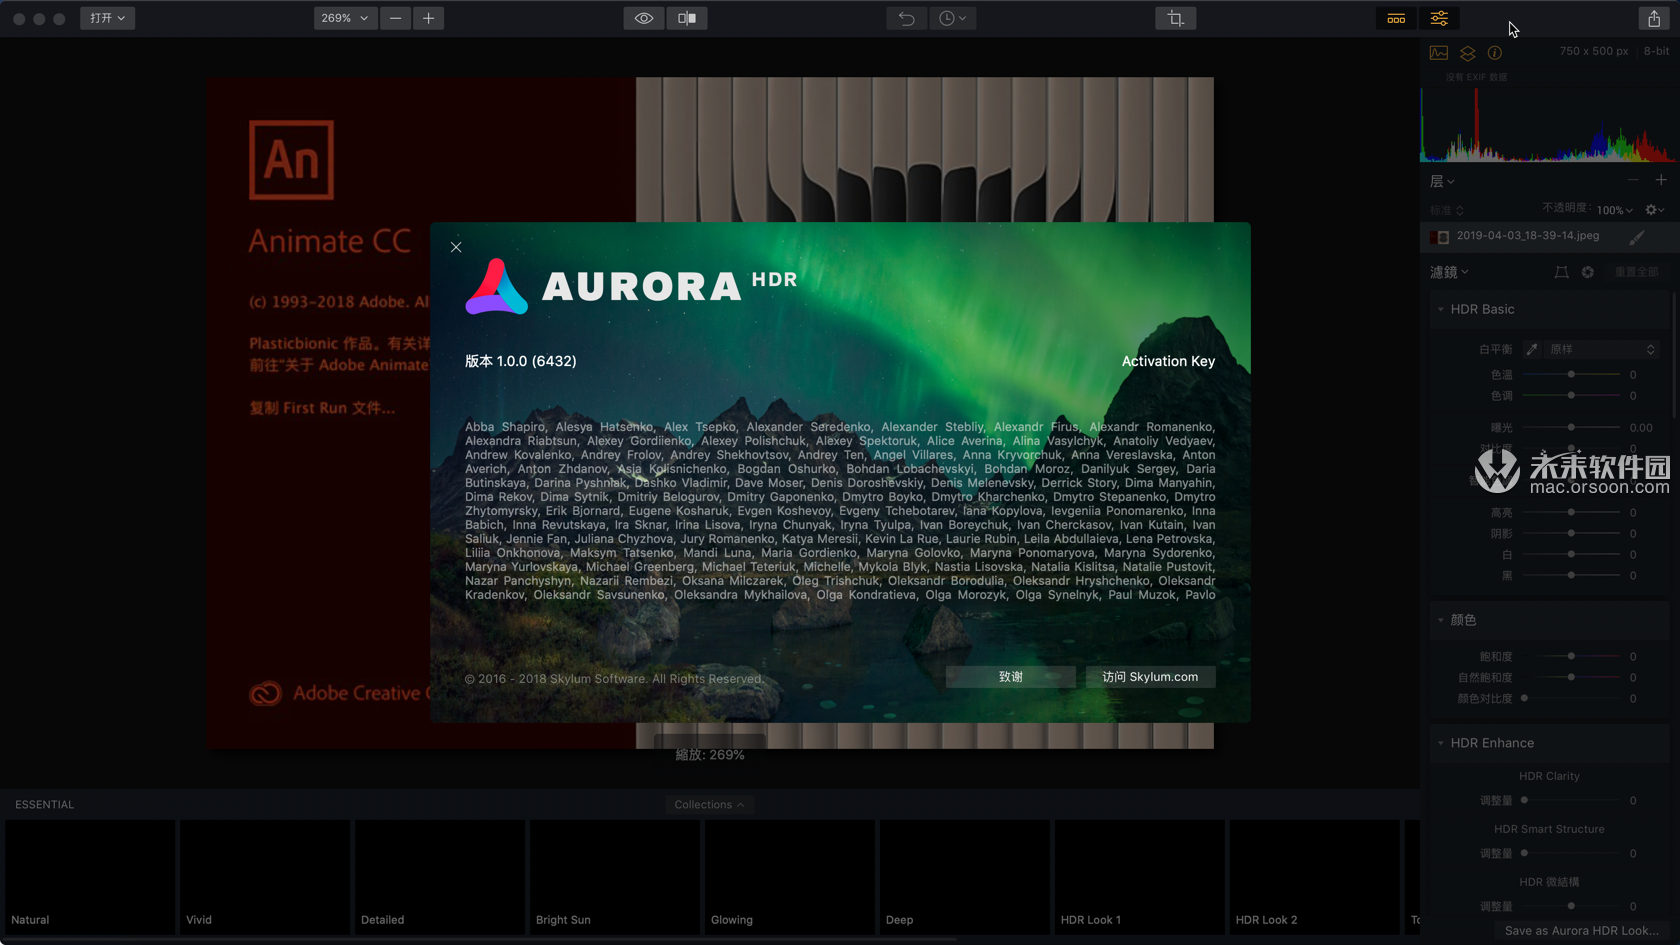 Aurora HDR 2019 for mac有哪些改进